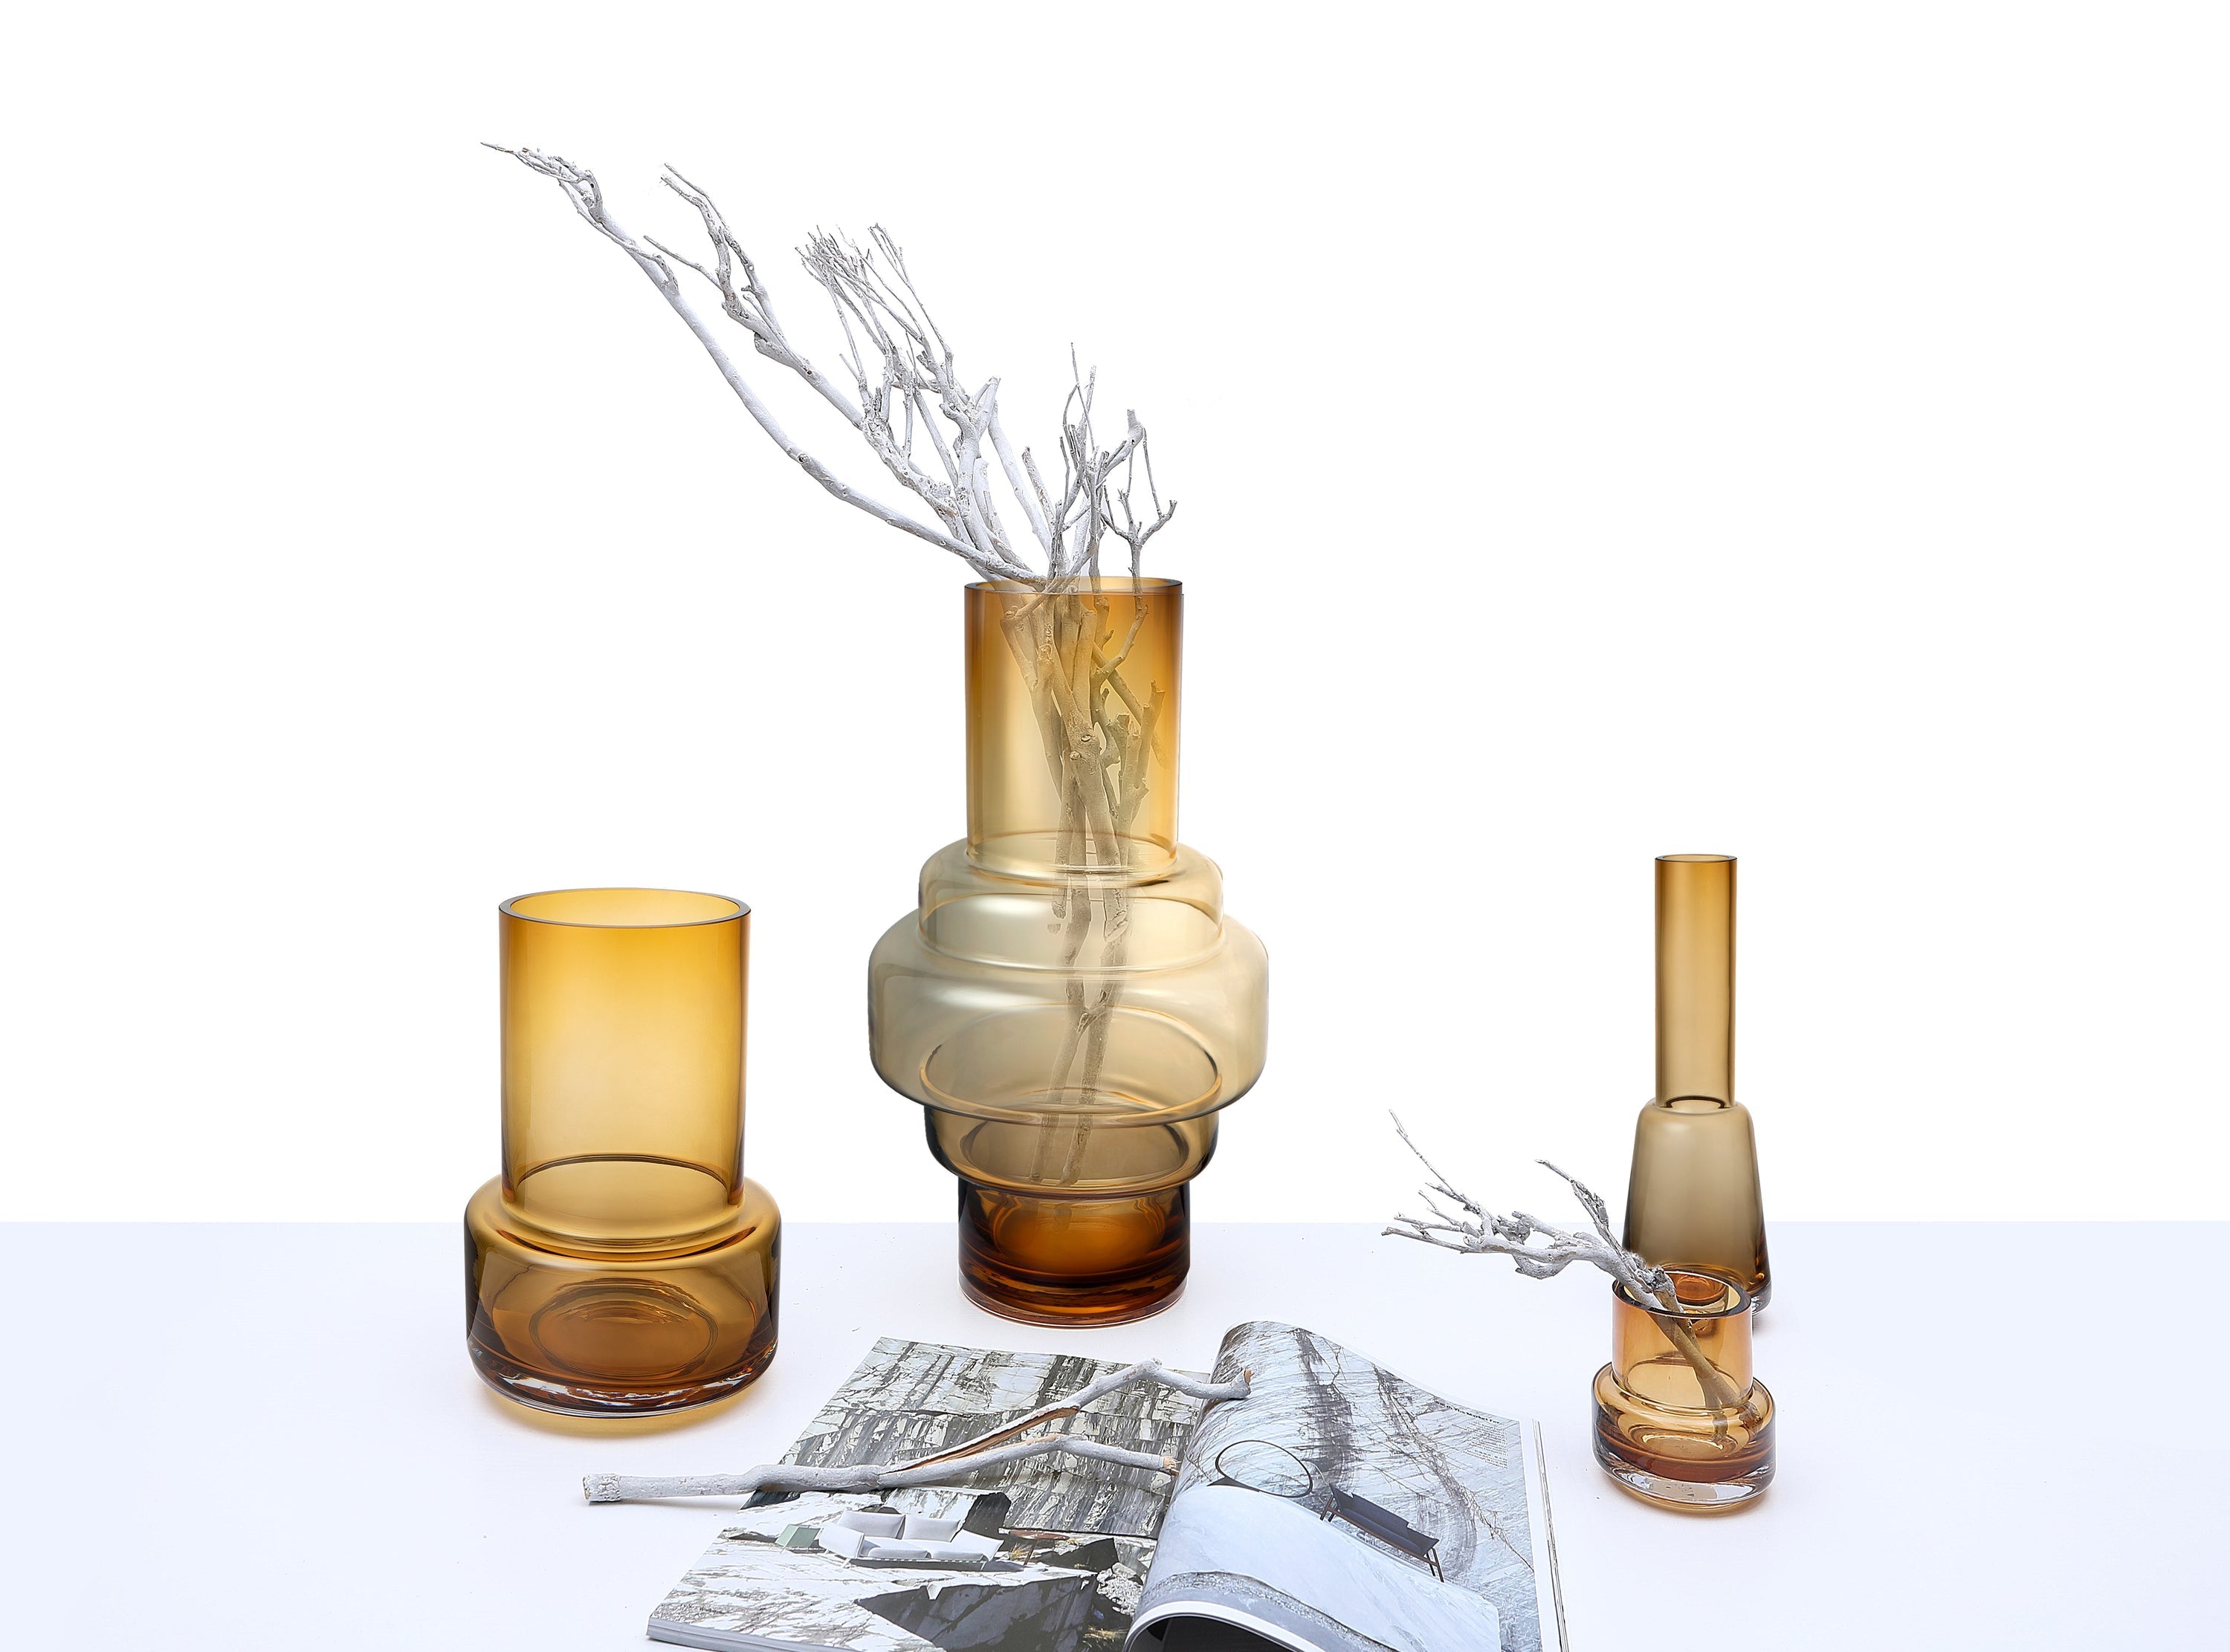 Retro style modern classy design vase, amber color, TYLER12AM